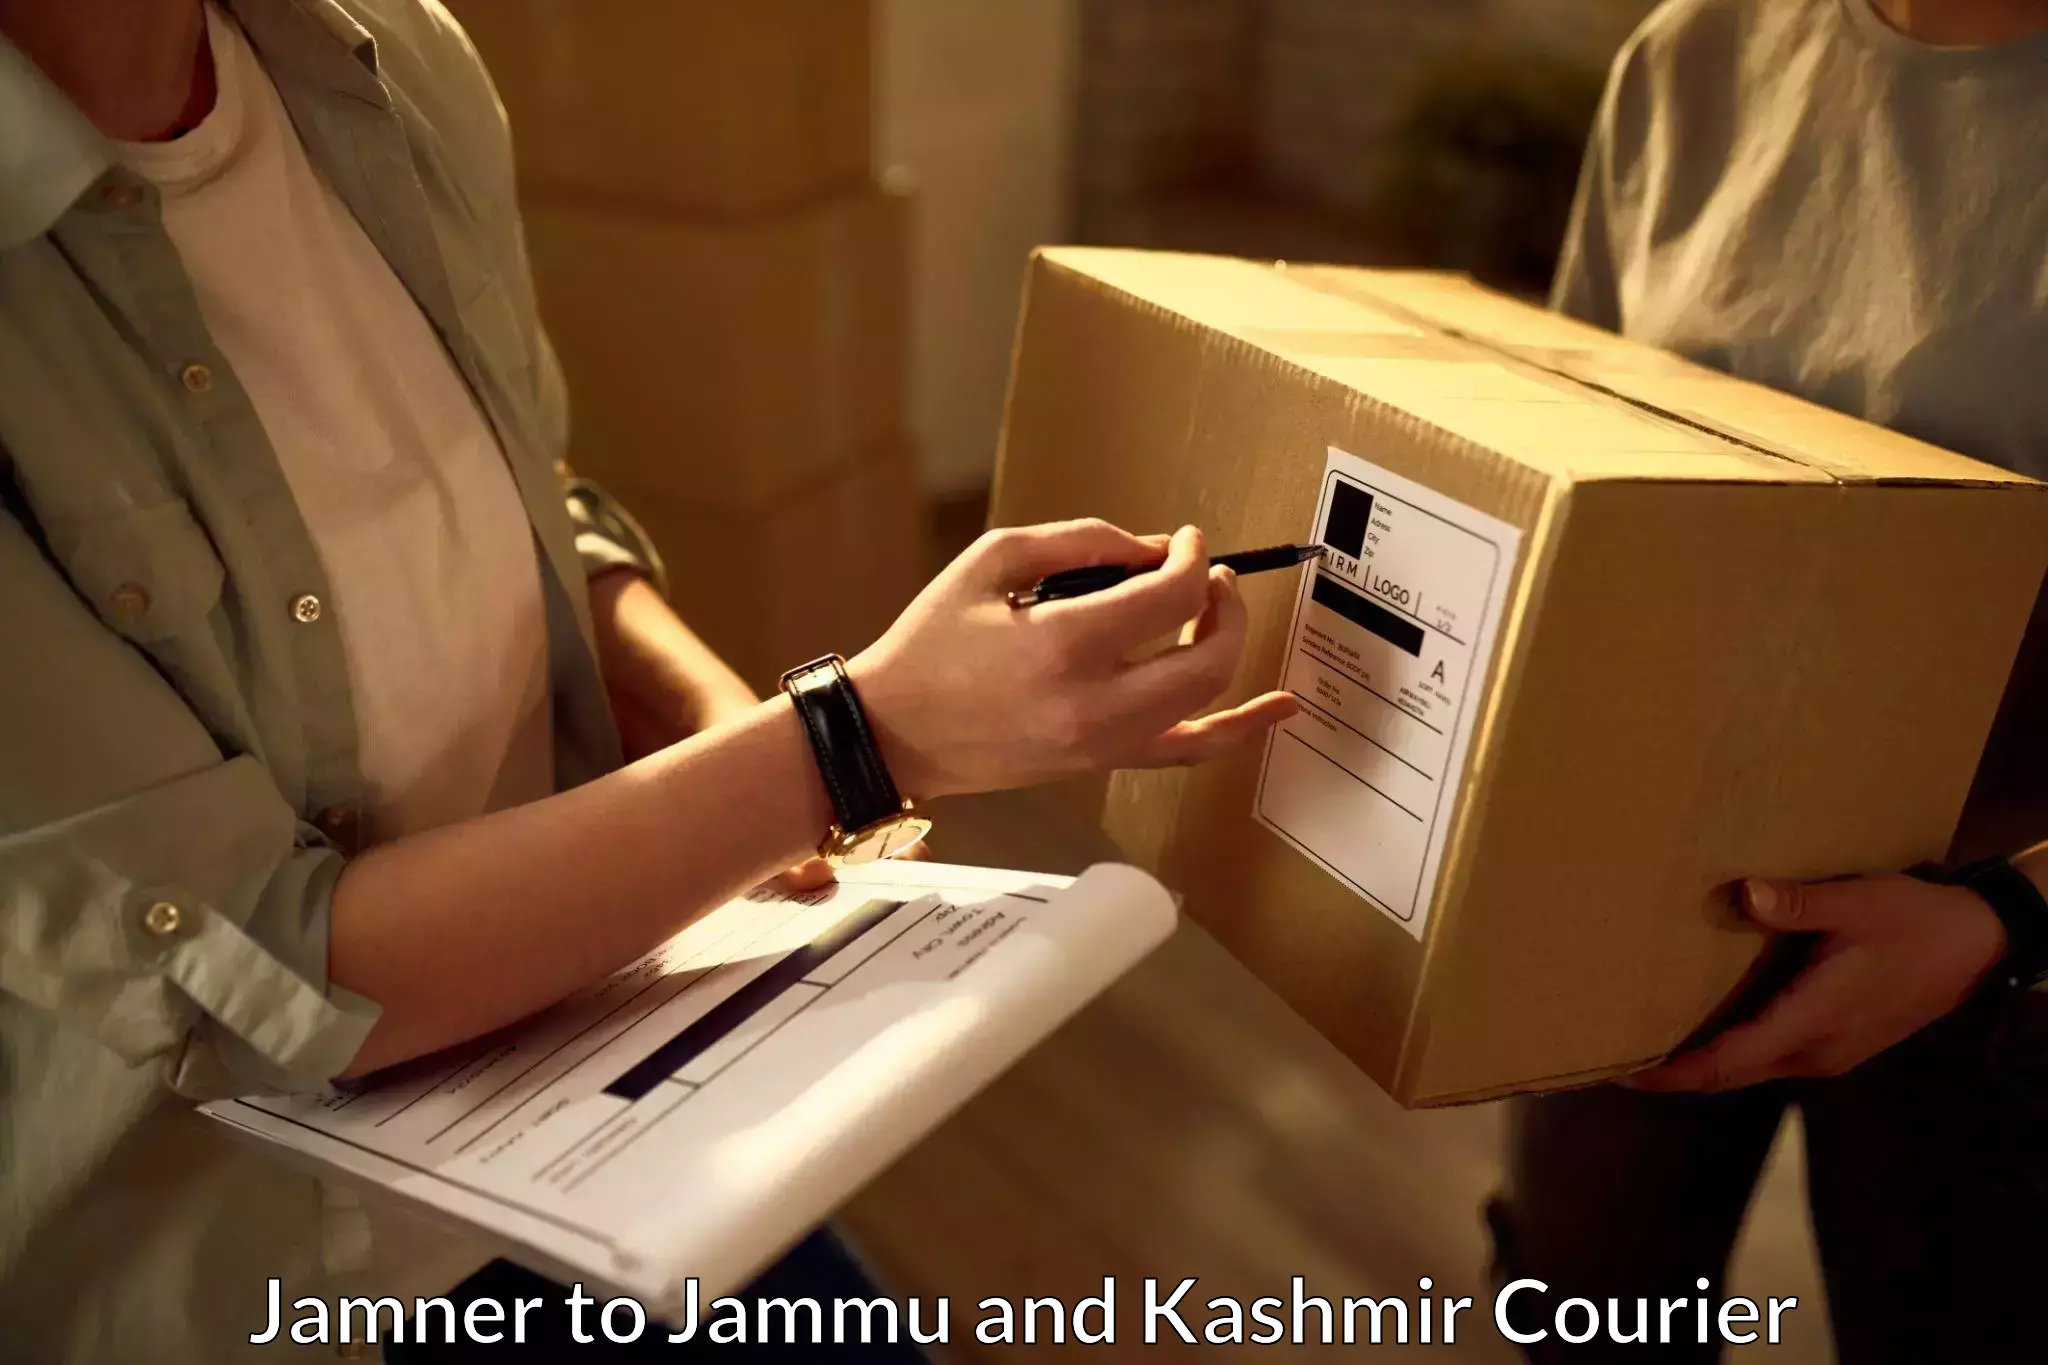 Expedited shipping methods Jamner to Jammu and Kashmir